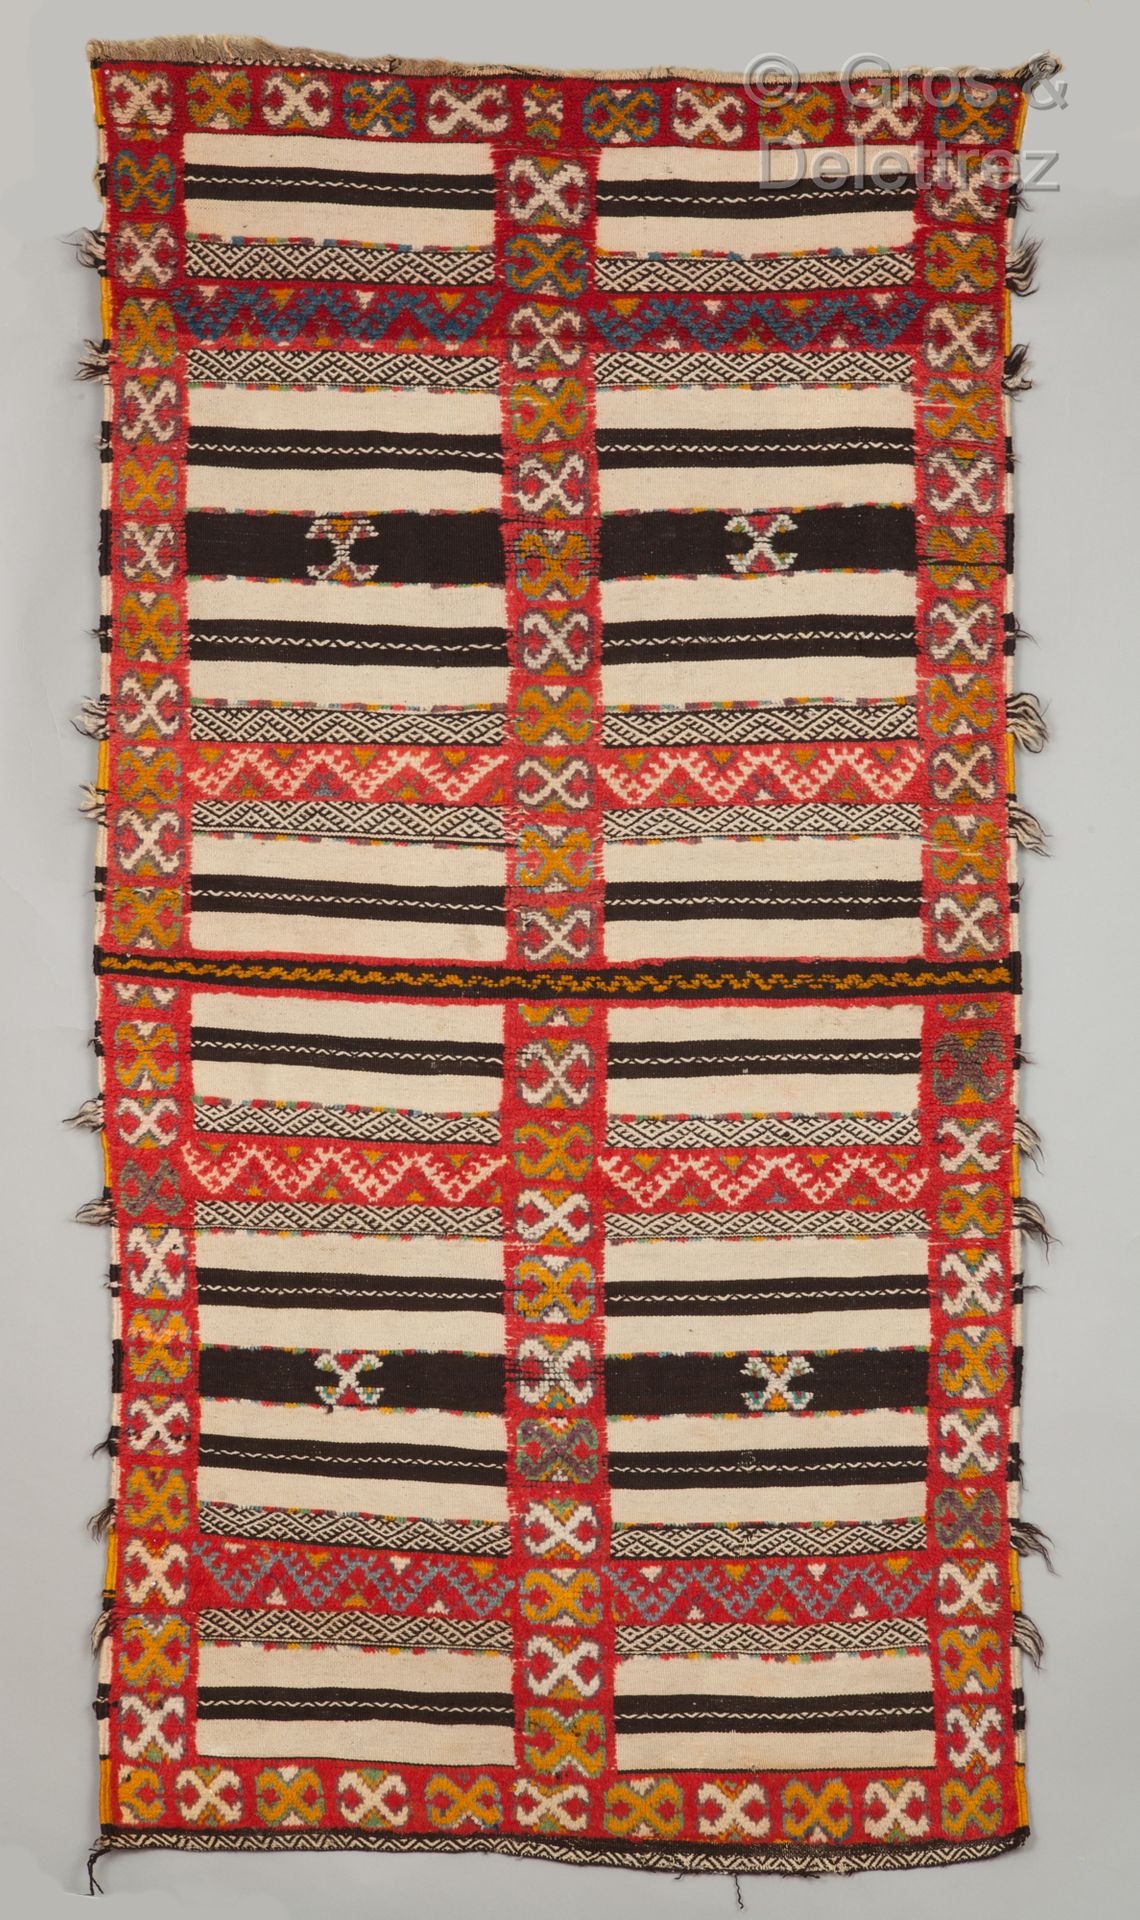 Null " Una alfombra anudada y tejida de Ait Ouaouzguite, Marruecos

Una alfombra&hellip;